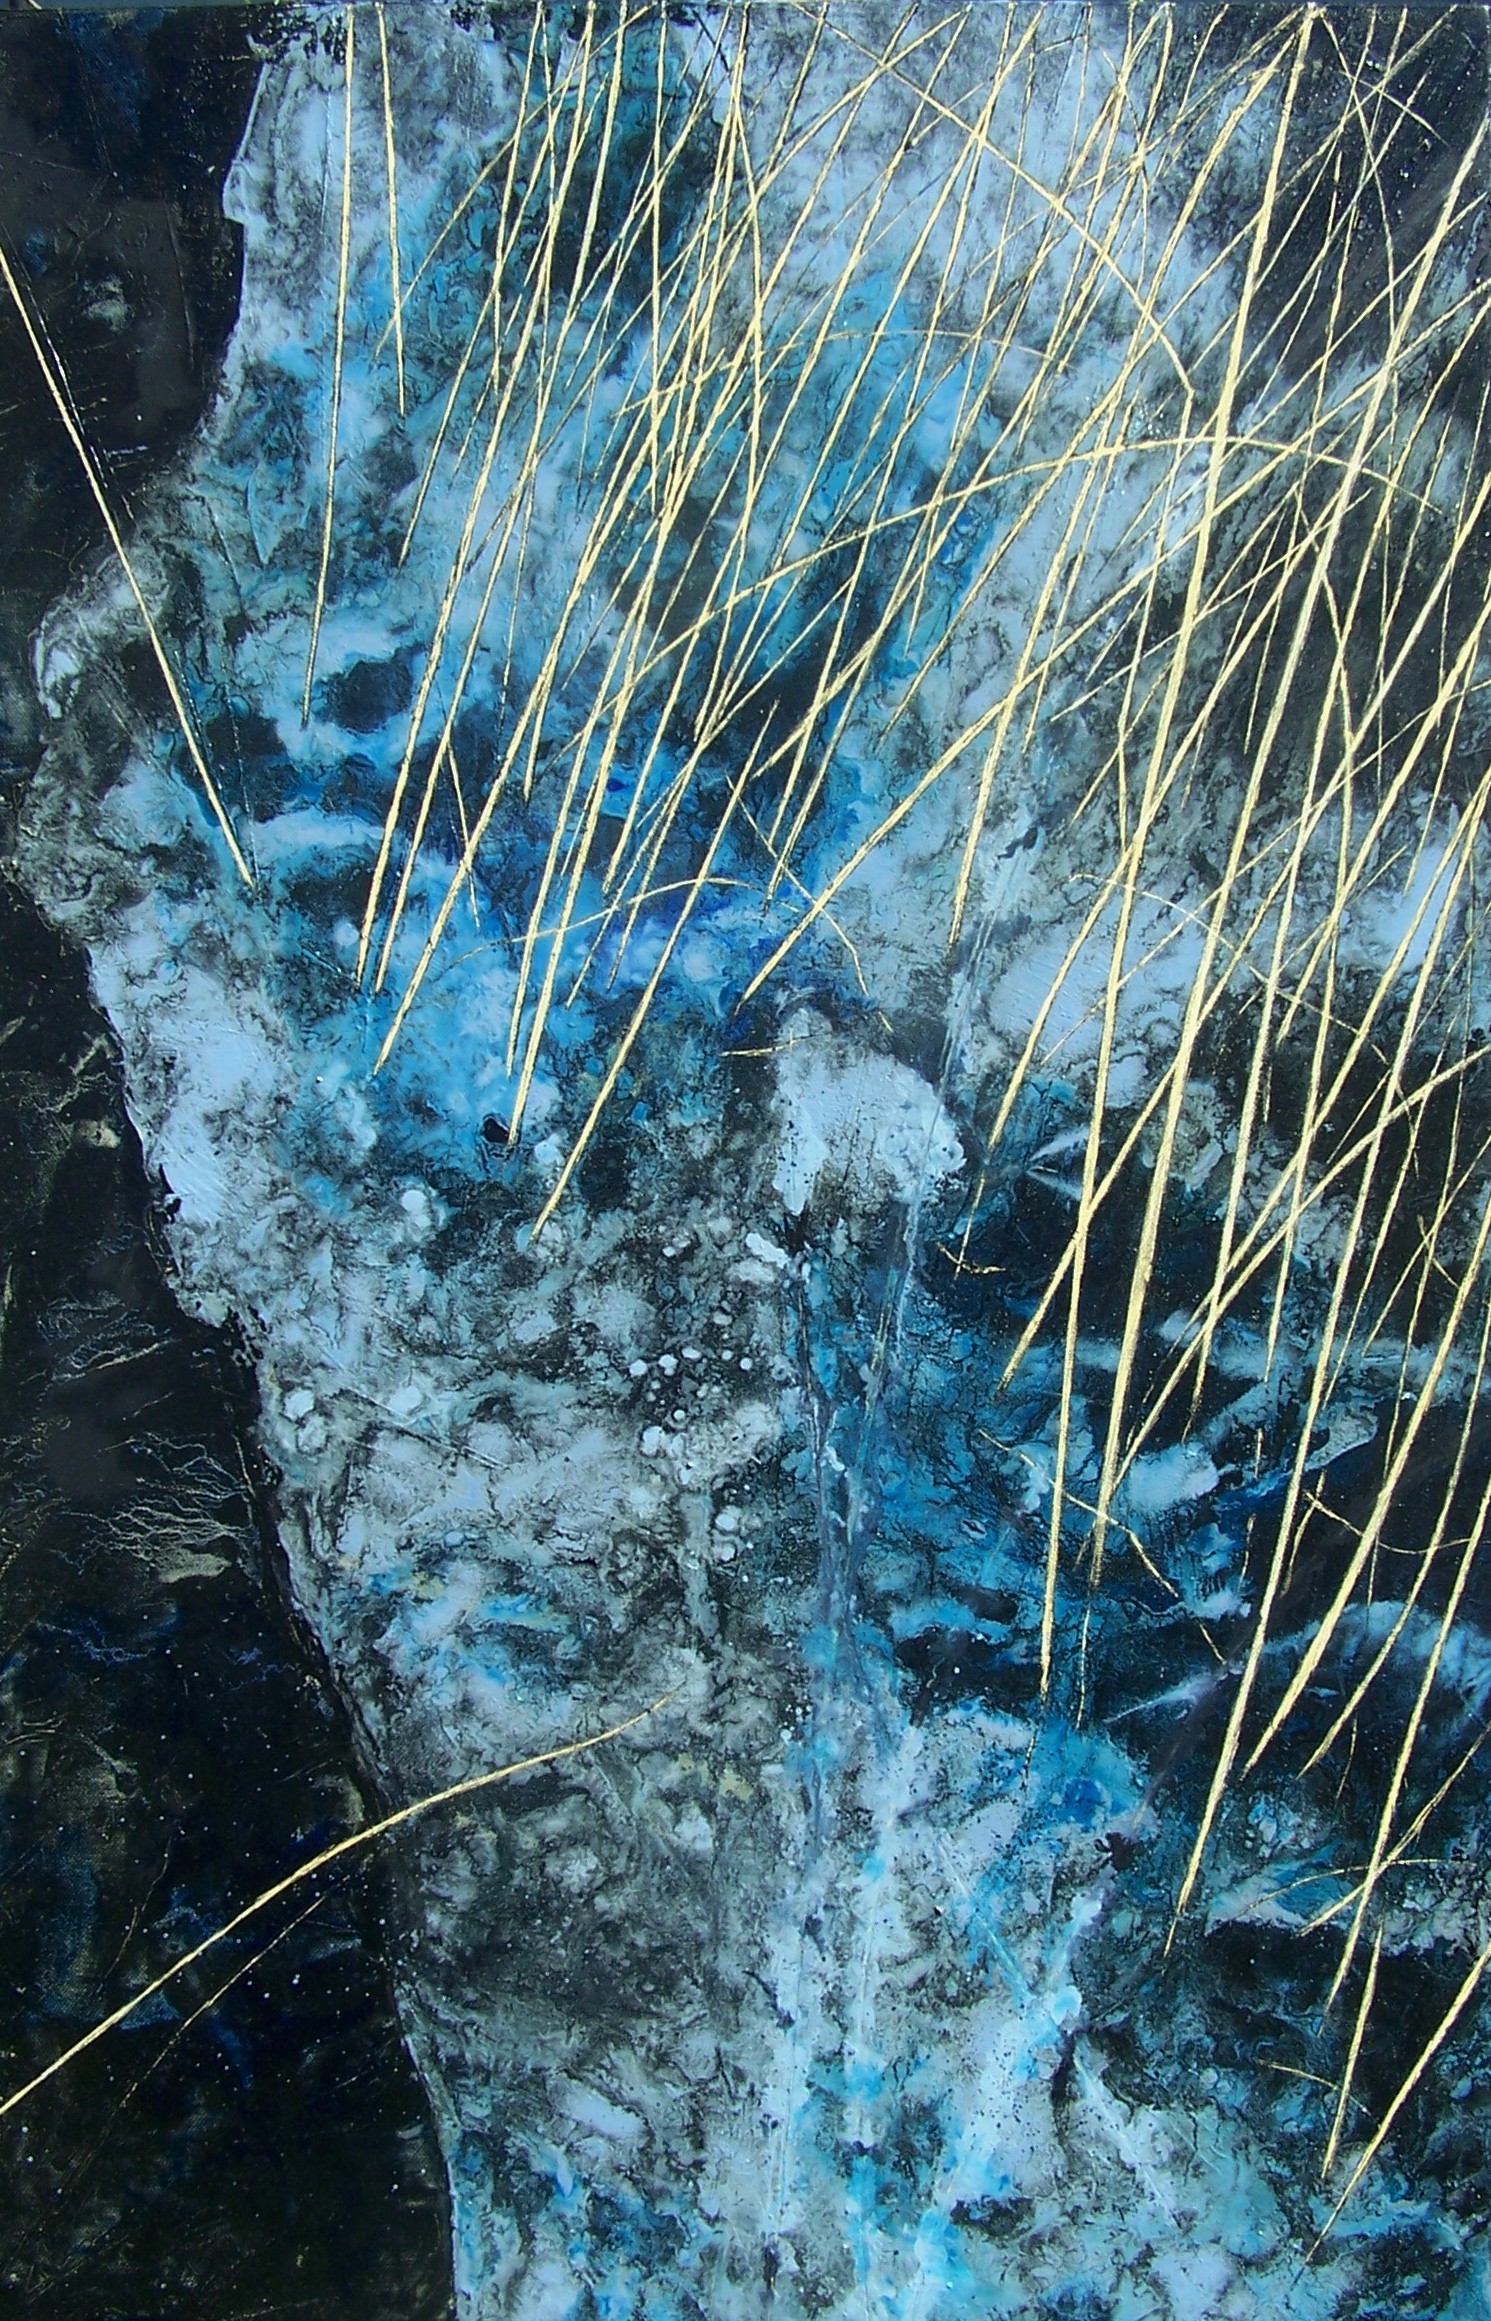 Frozen Line, Winter Reeds. oil on canvas